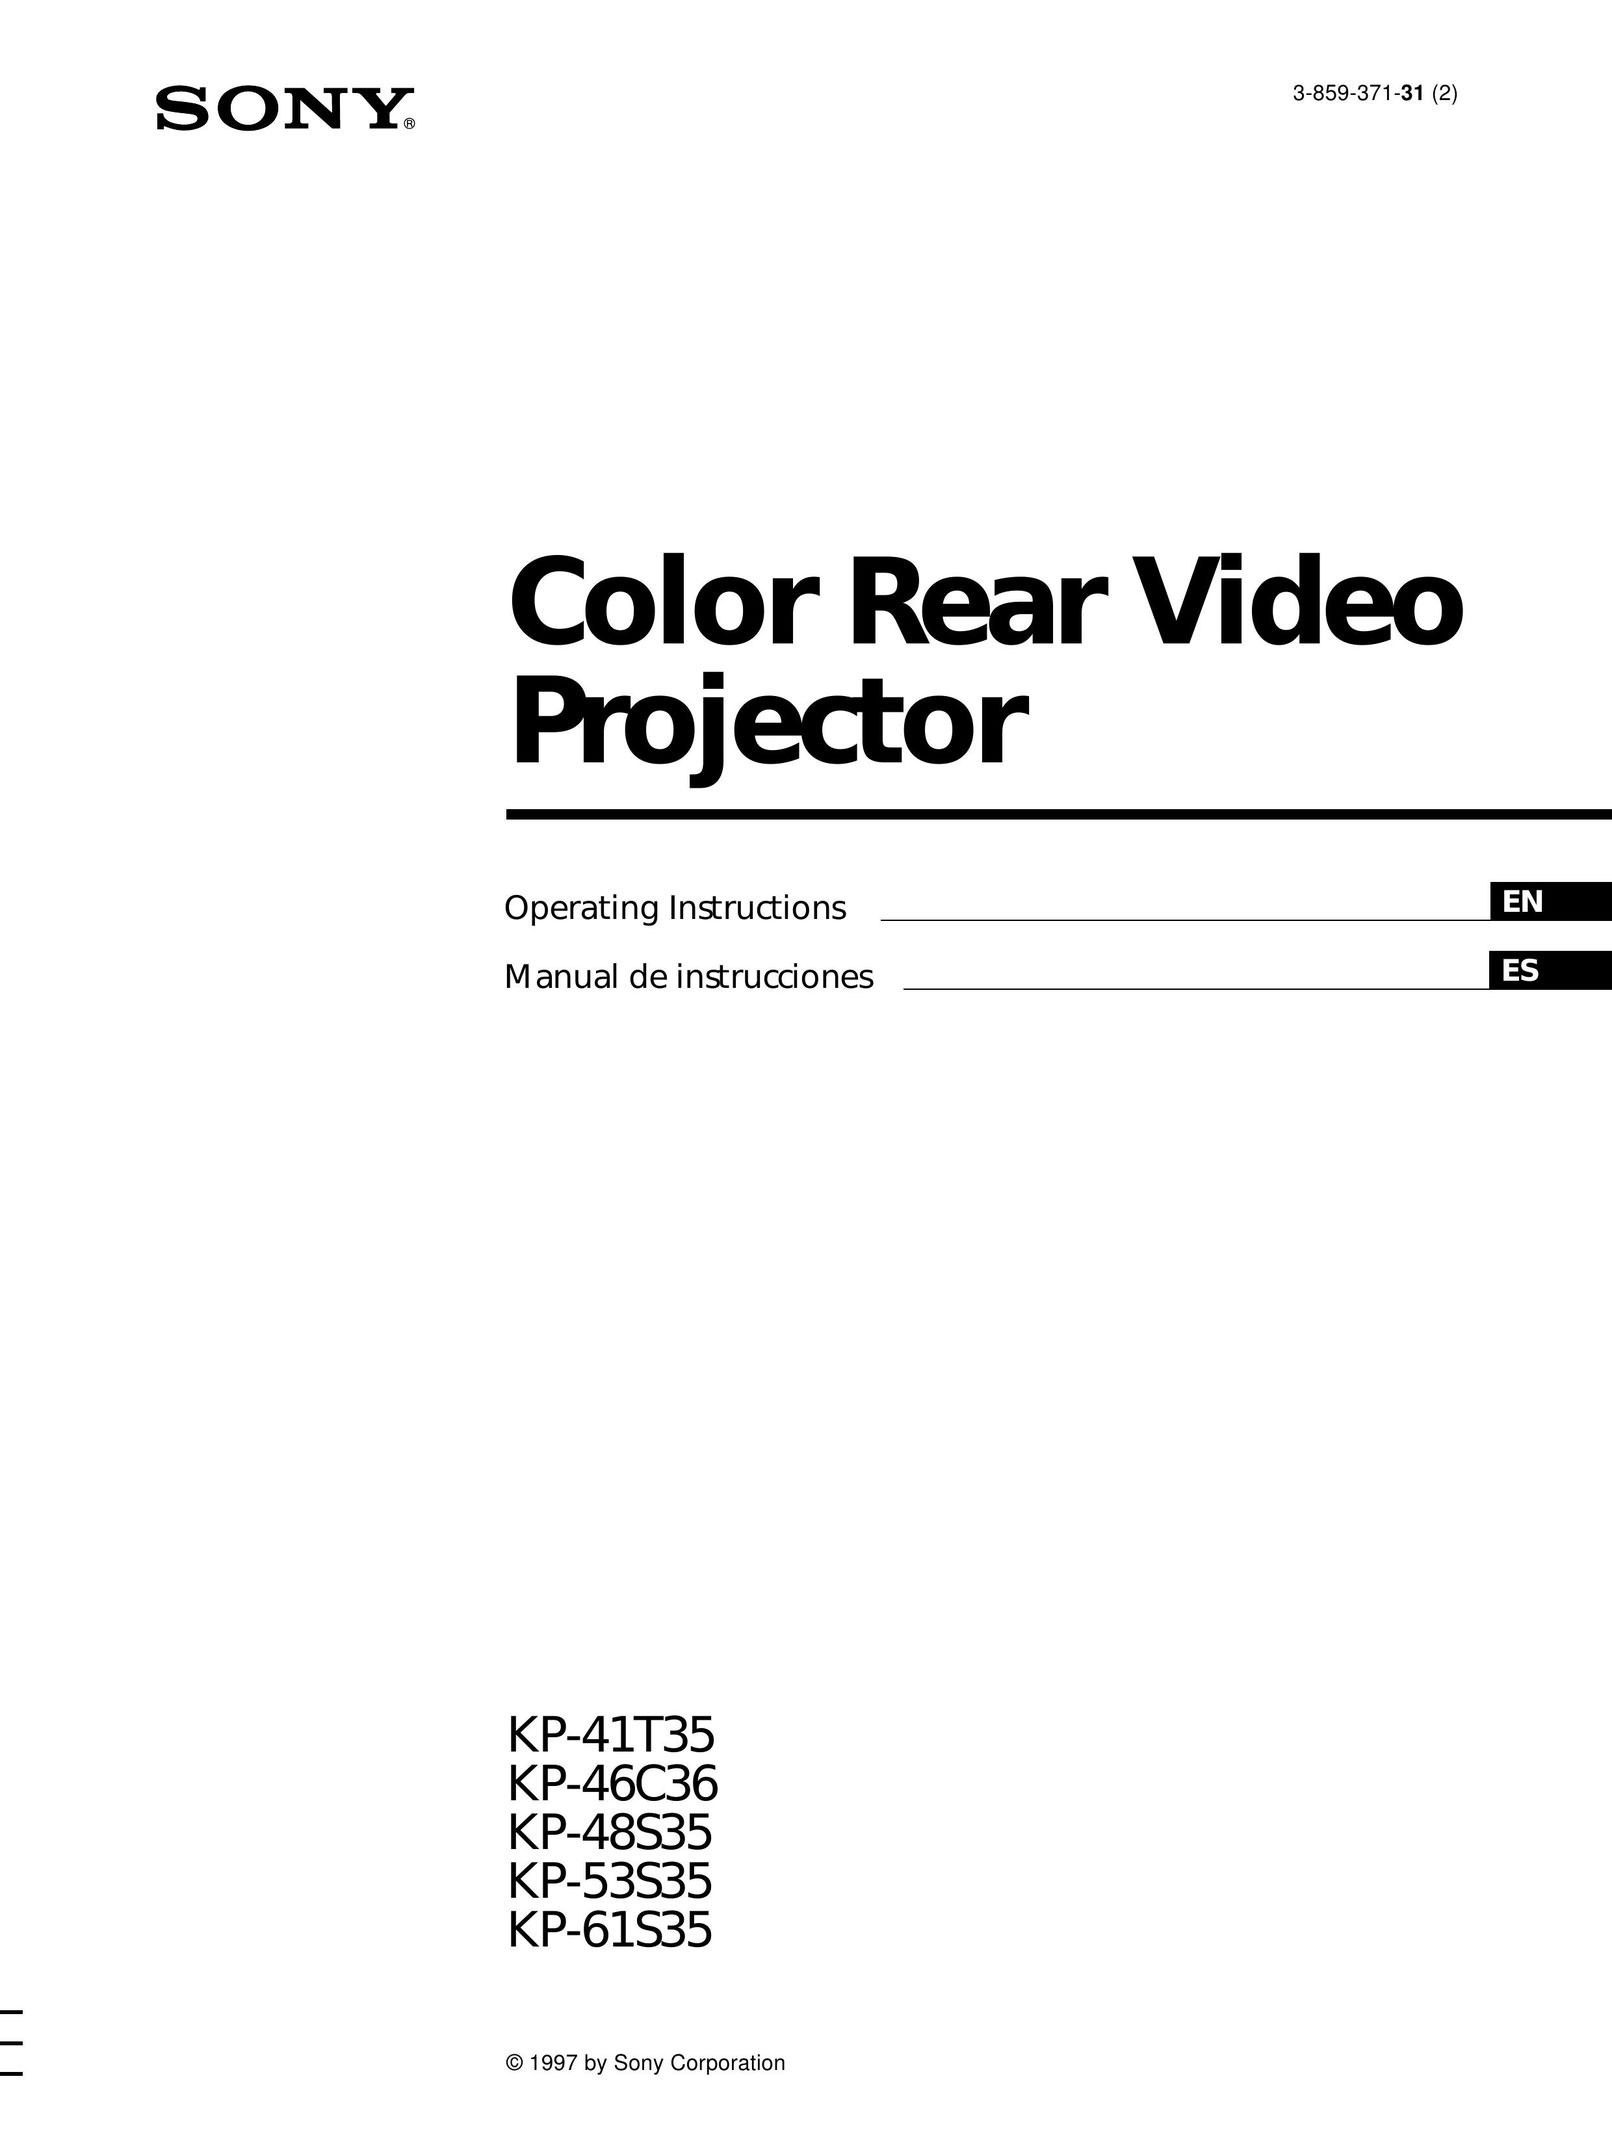 Sony KP-41T35 Projector User Manual